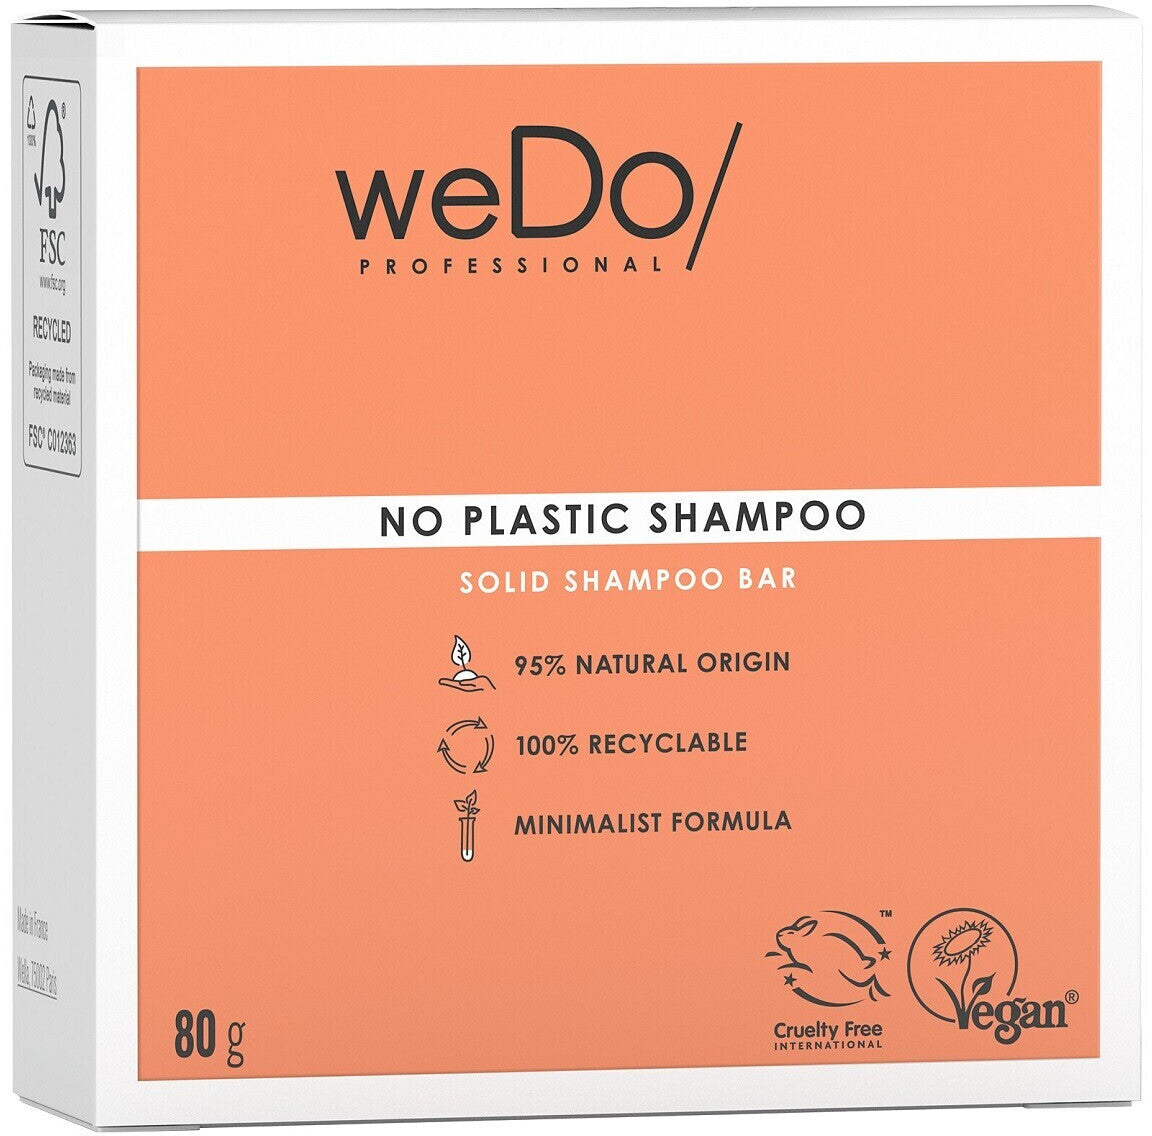 WeDo/Professional No Plastic Shampoo Bar